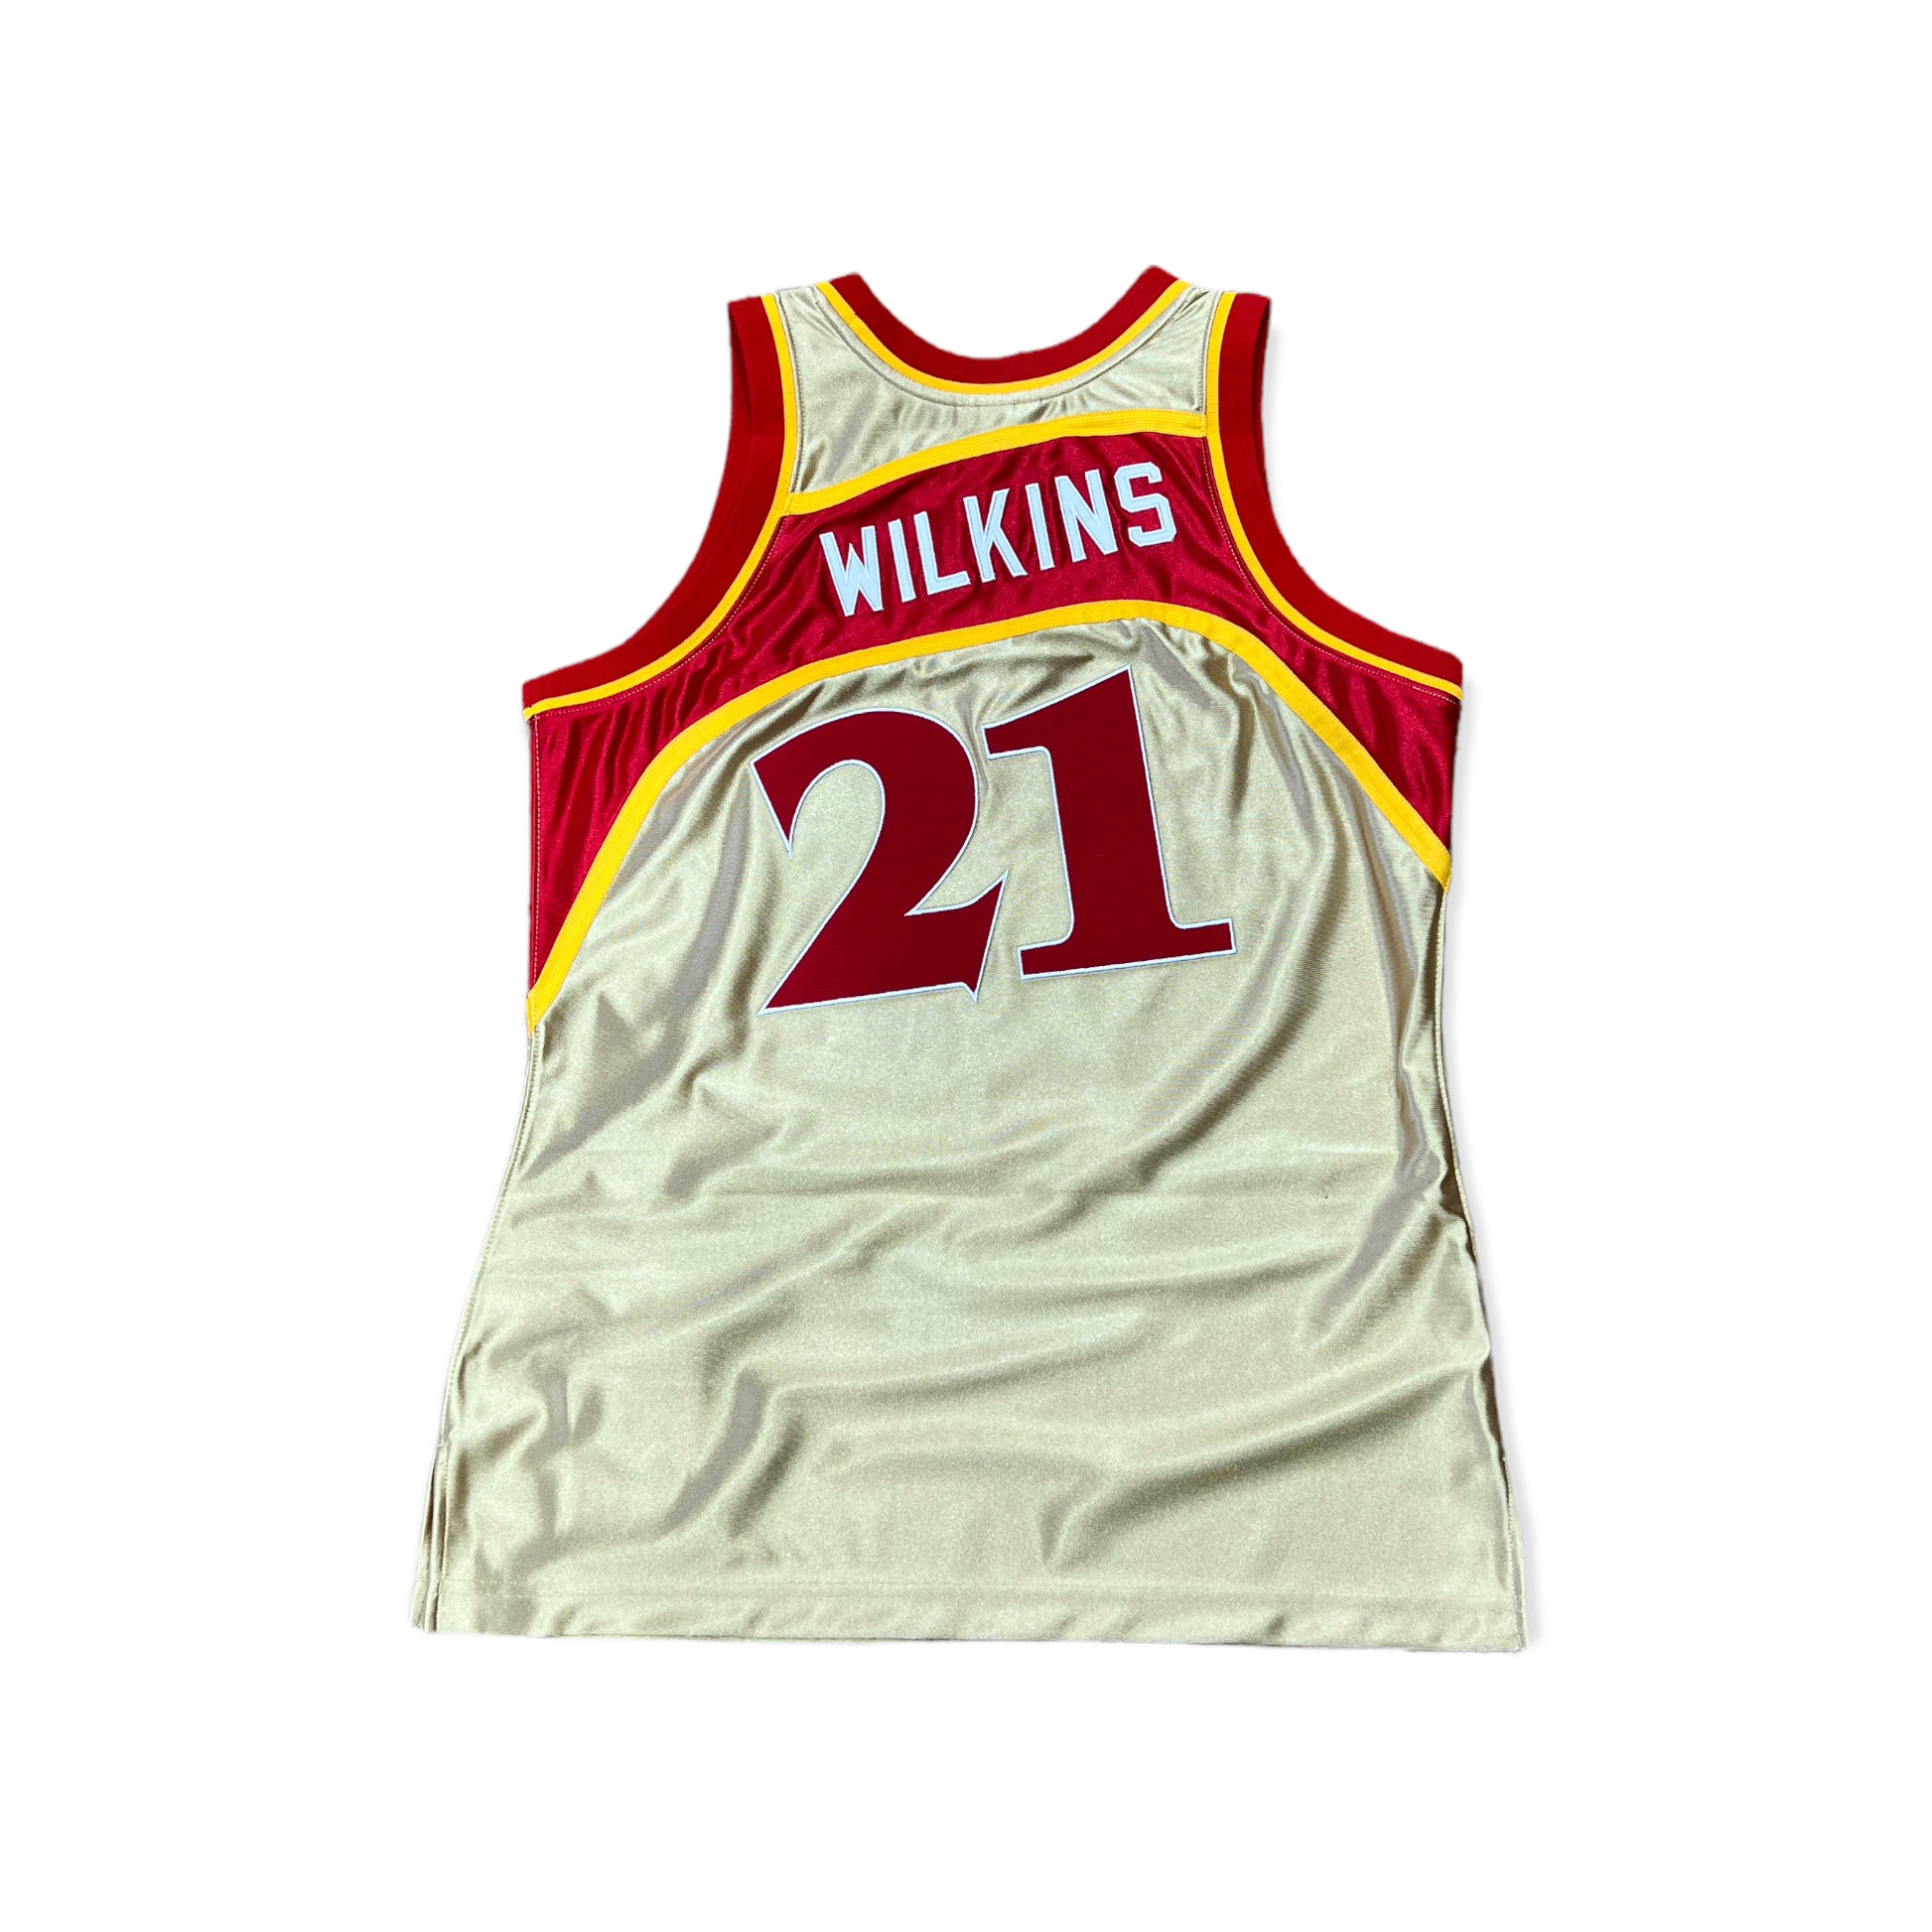 Mitchell & Ness Dominique Wilkins Hawks NBA 75th Anni